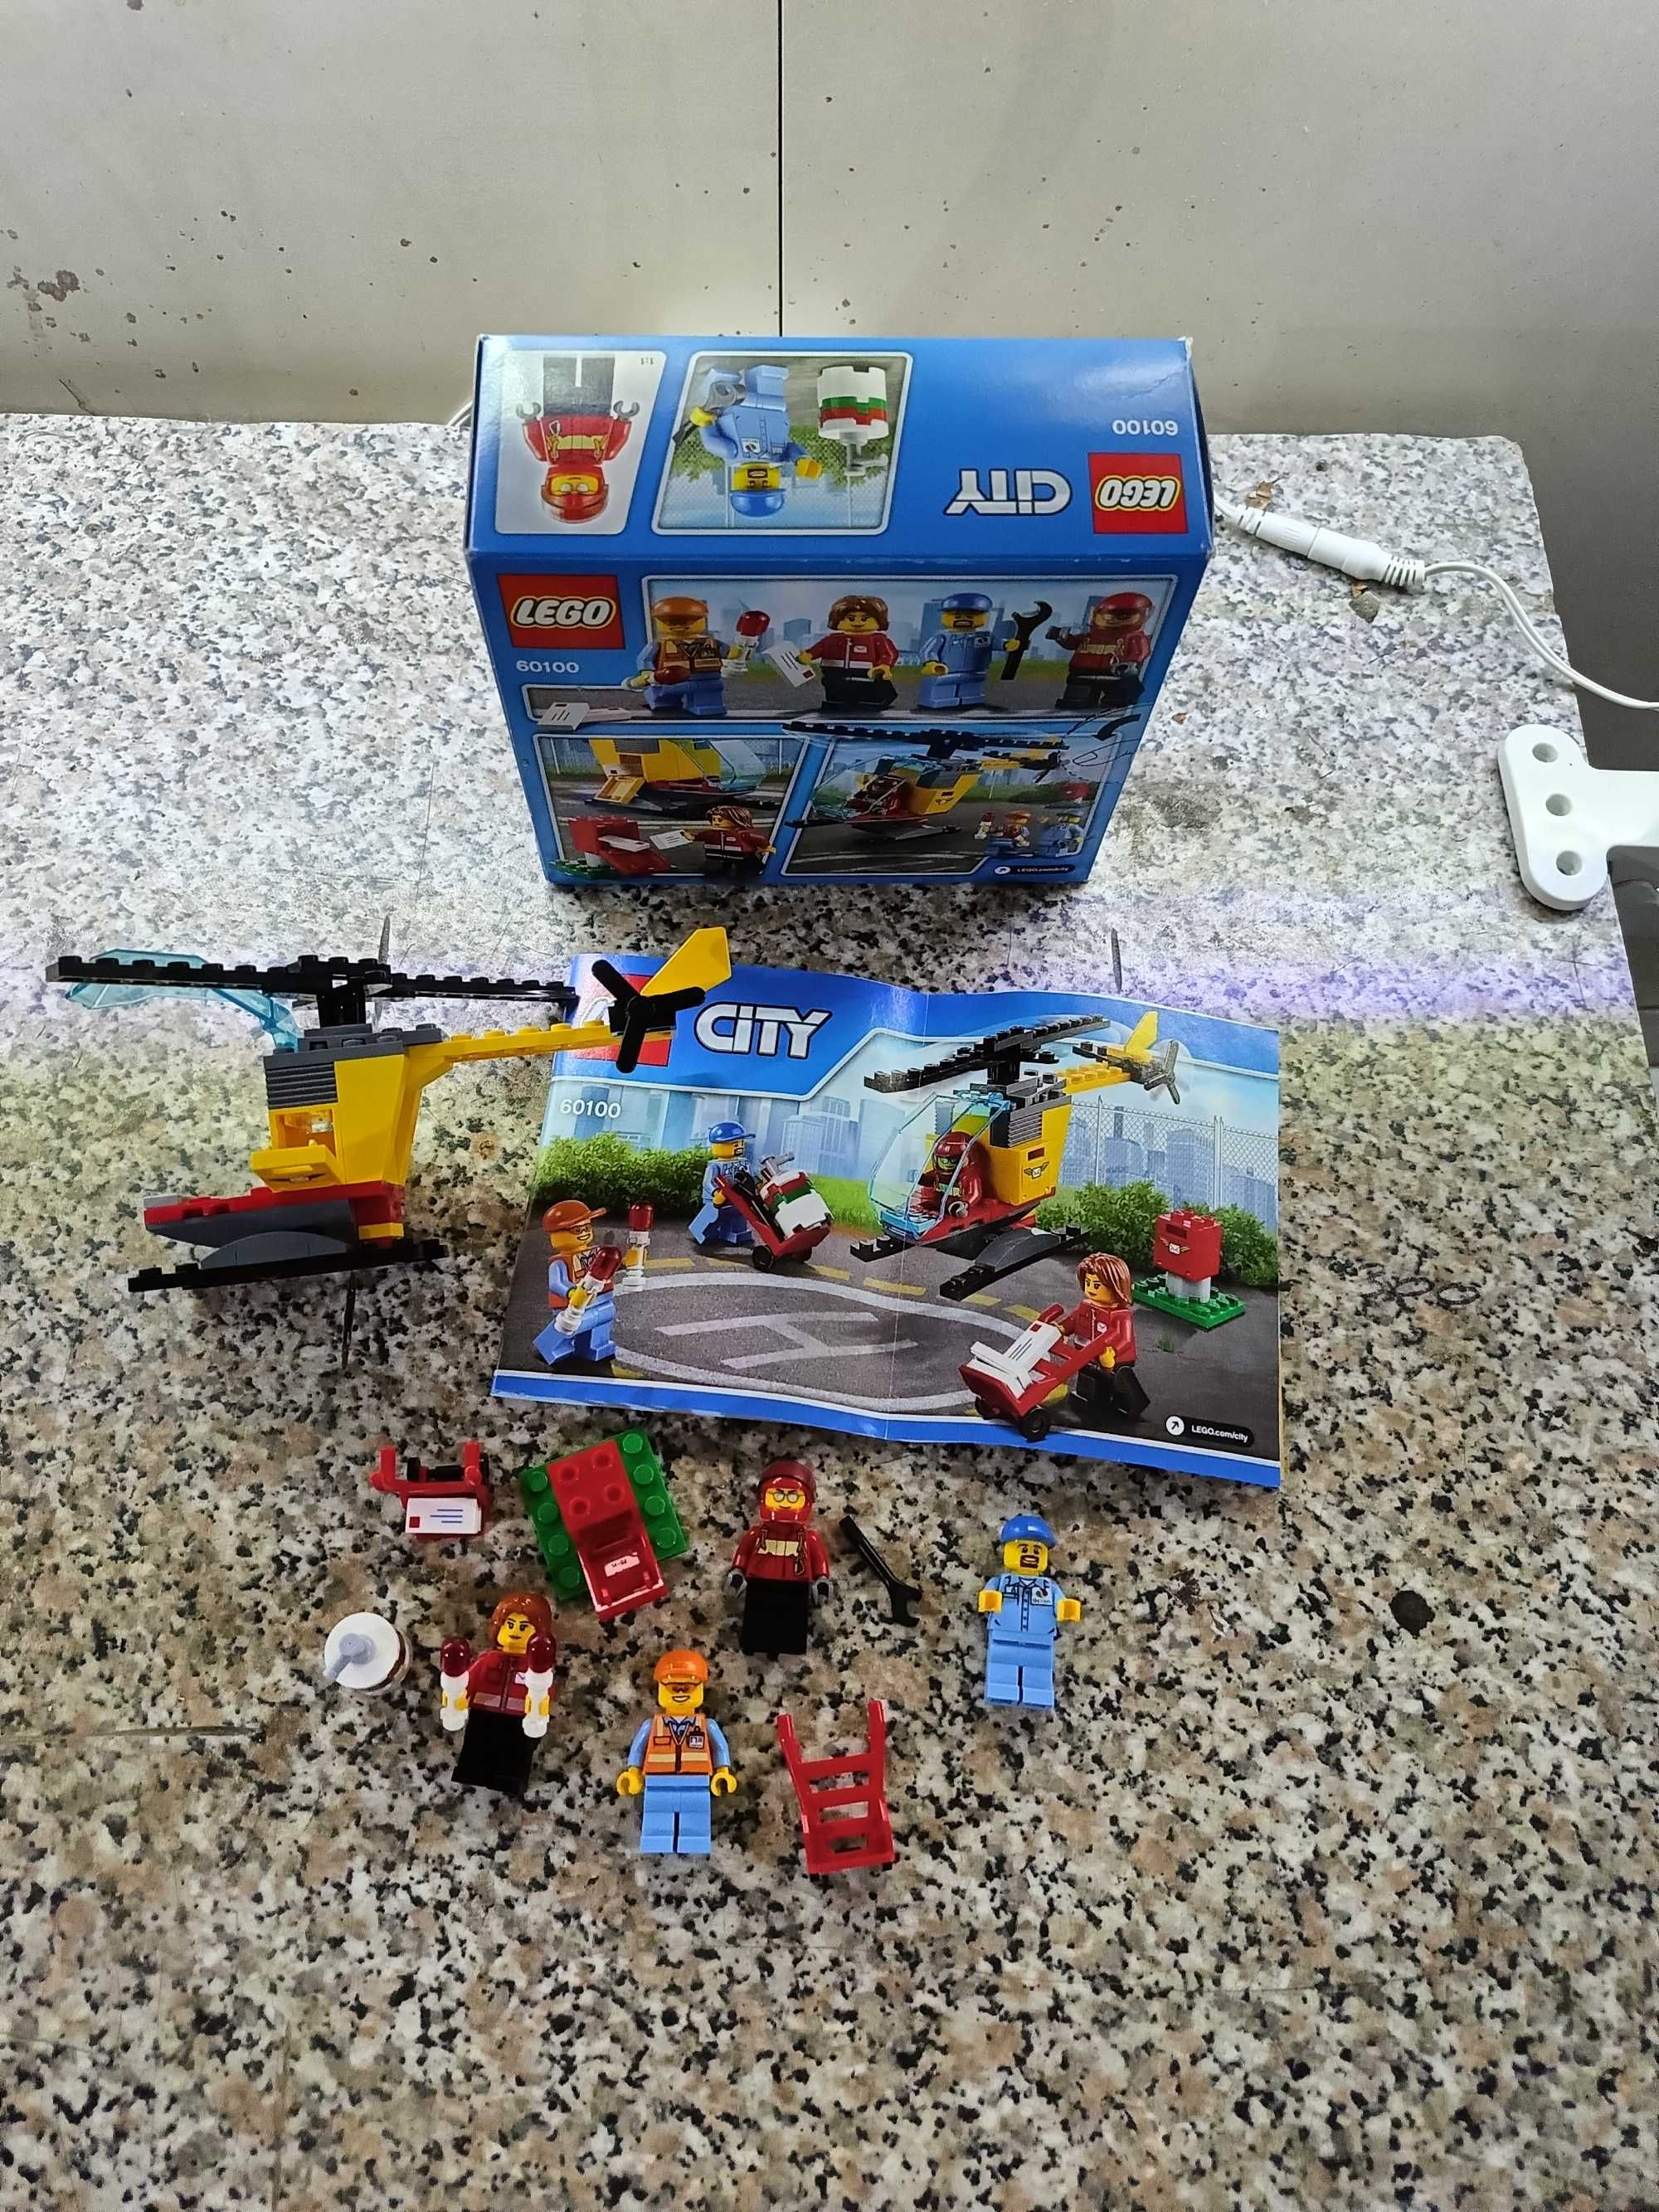 Lego city 60177 i 60100